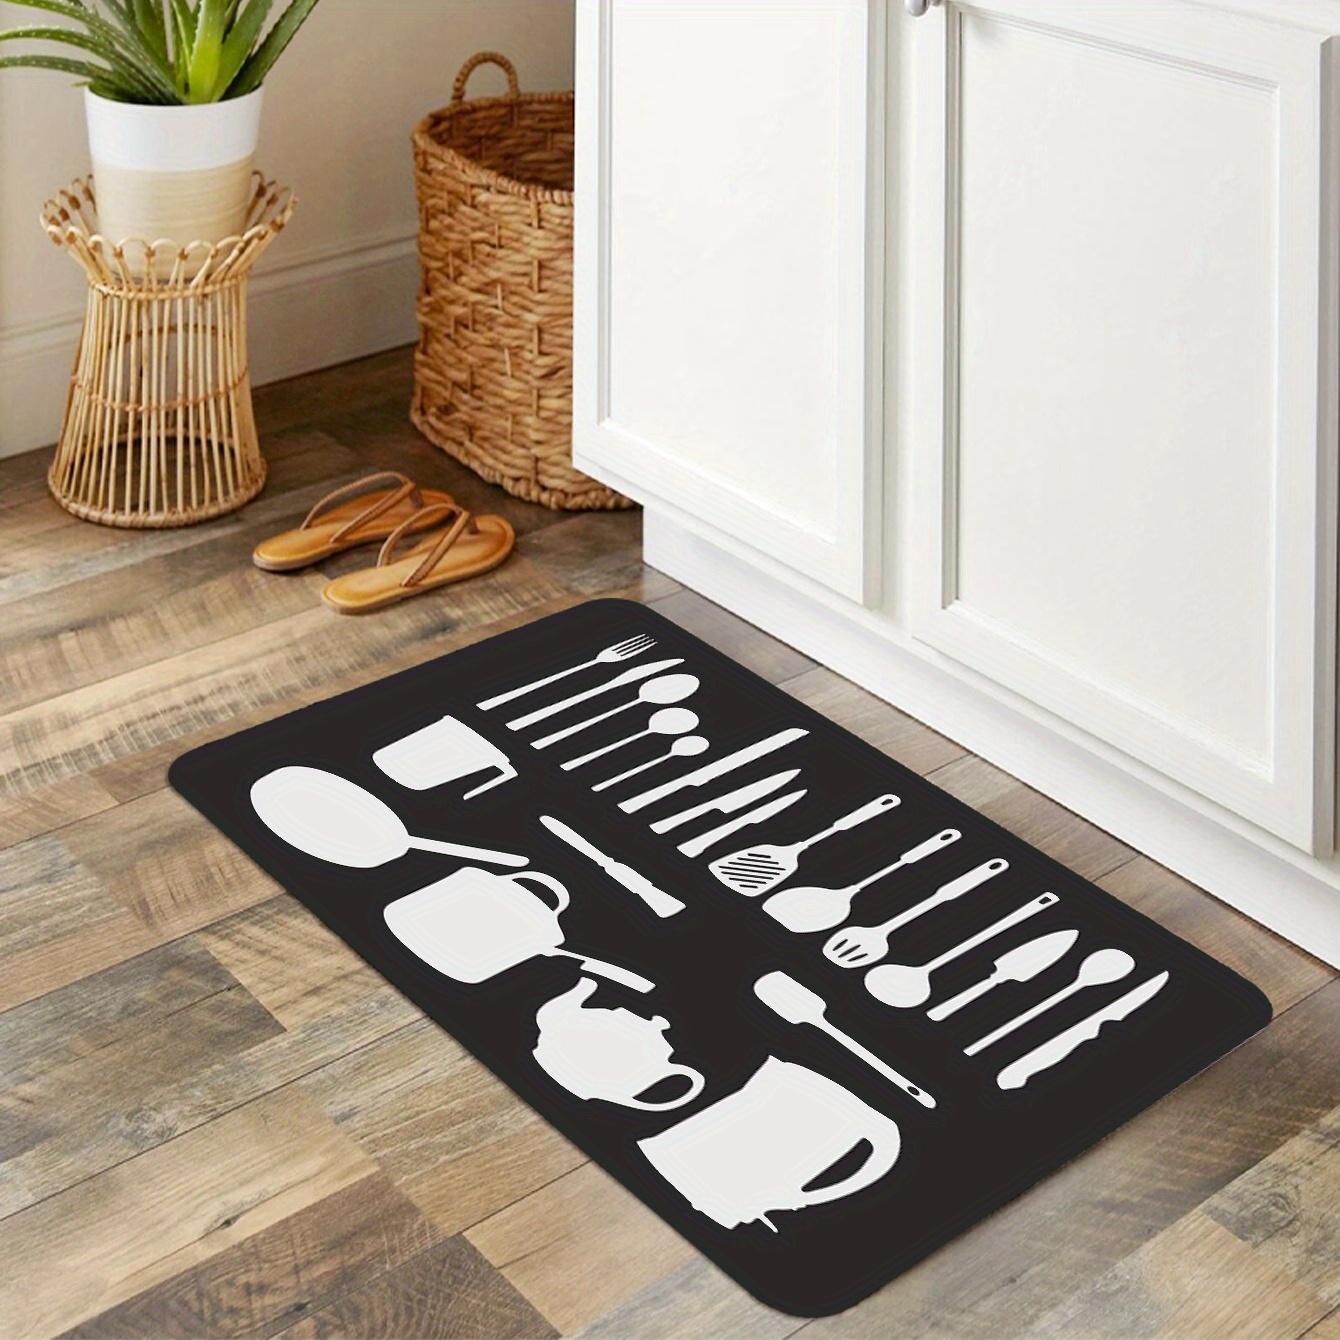 Buy Printed Home or Office Floor Mats